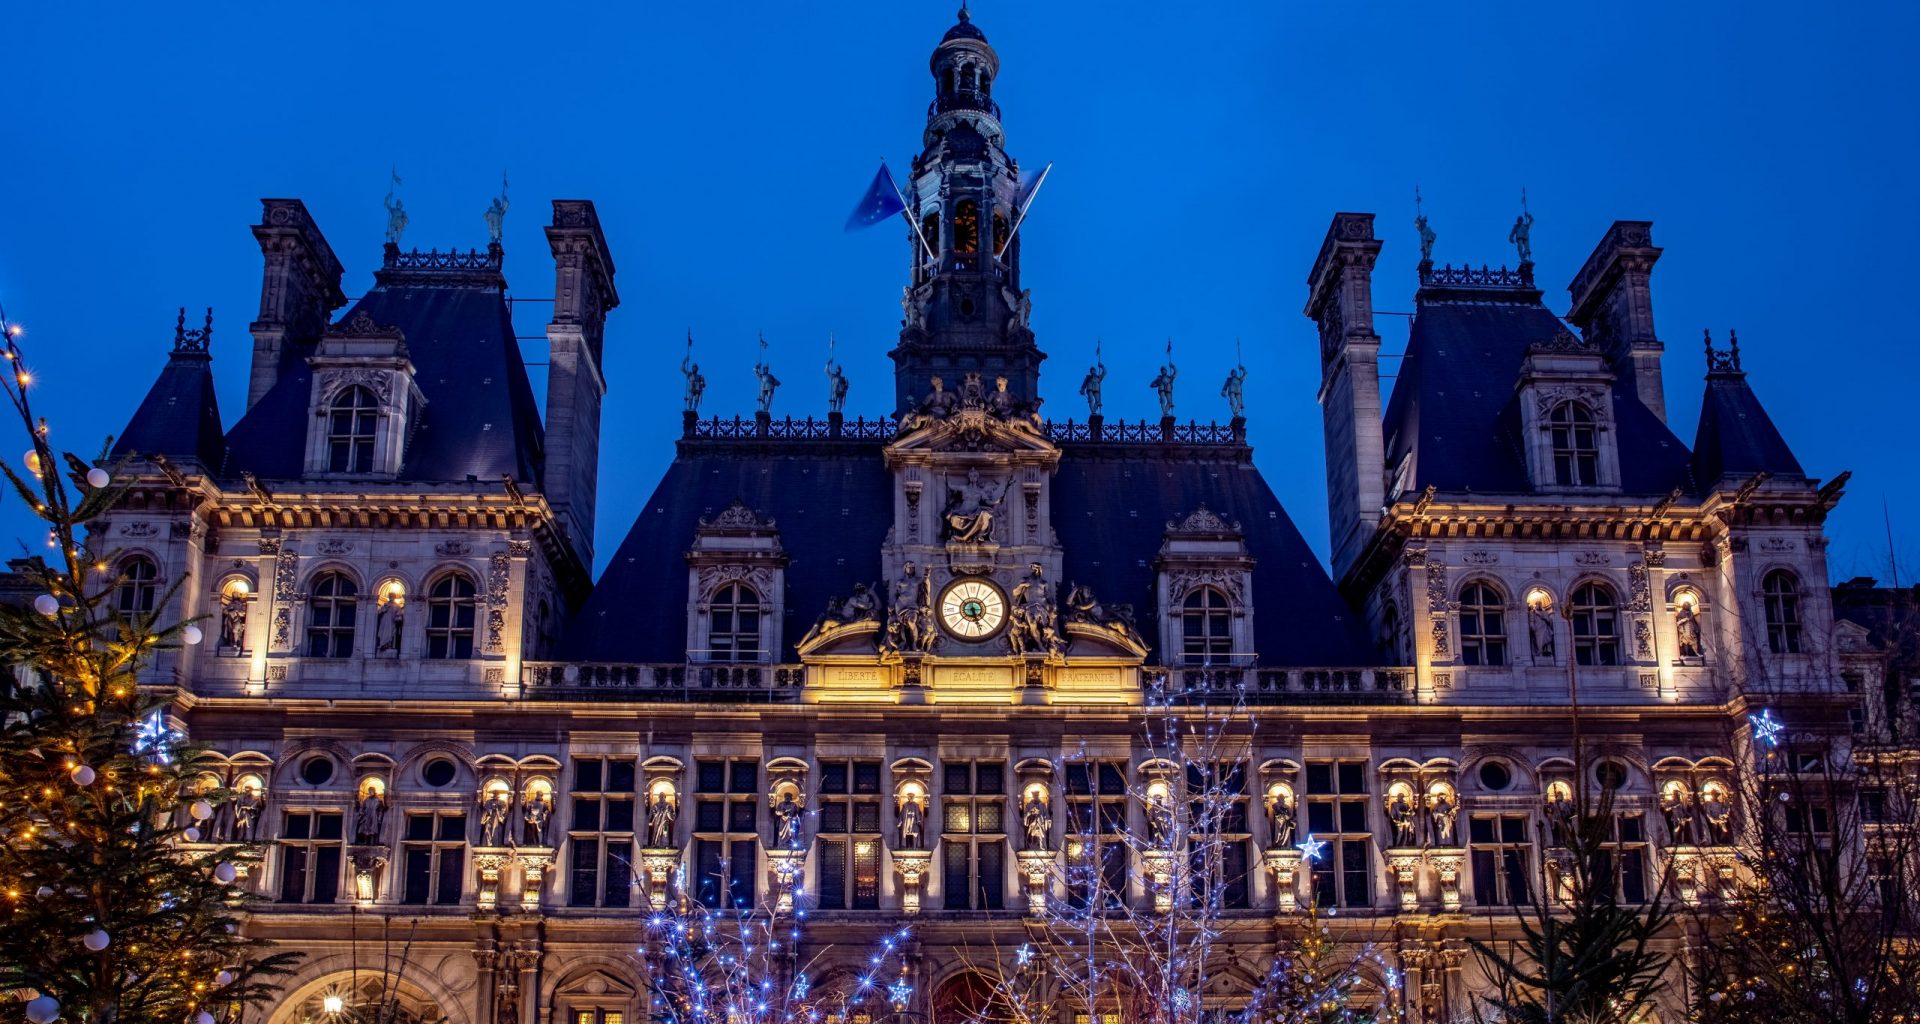 Illuminations de Noël à l'Hôtel de ville de Paris © Andrei Ianovskii